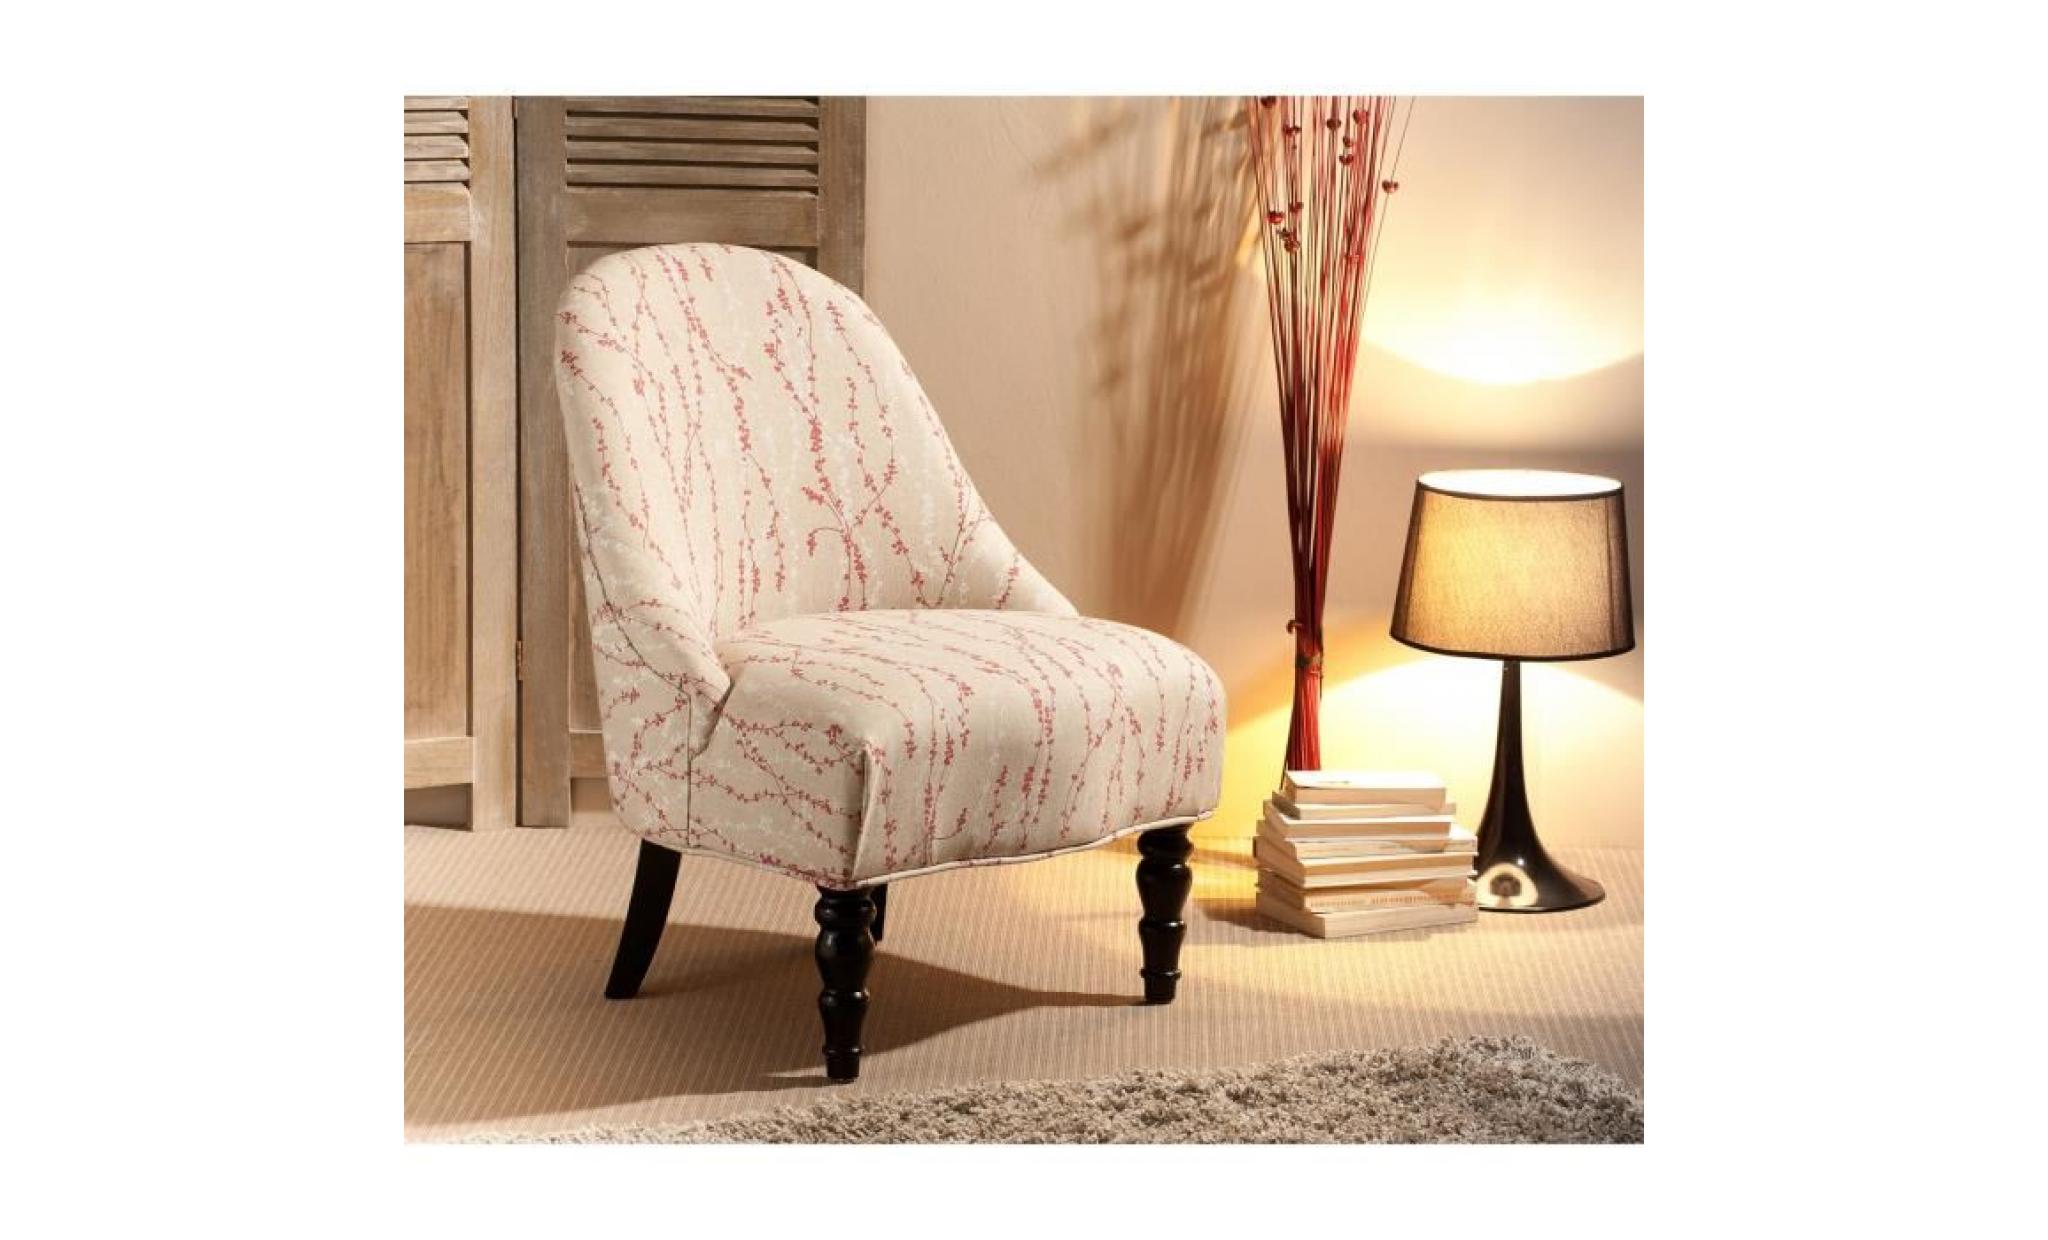 british fauteuil   tissu fleuri   style contemporain   l 54 x p 62 cm pas cher